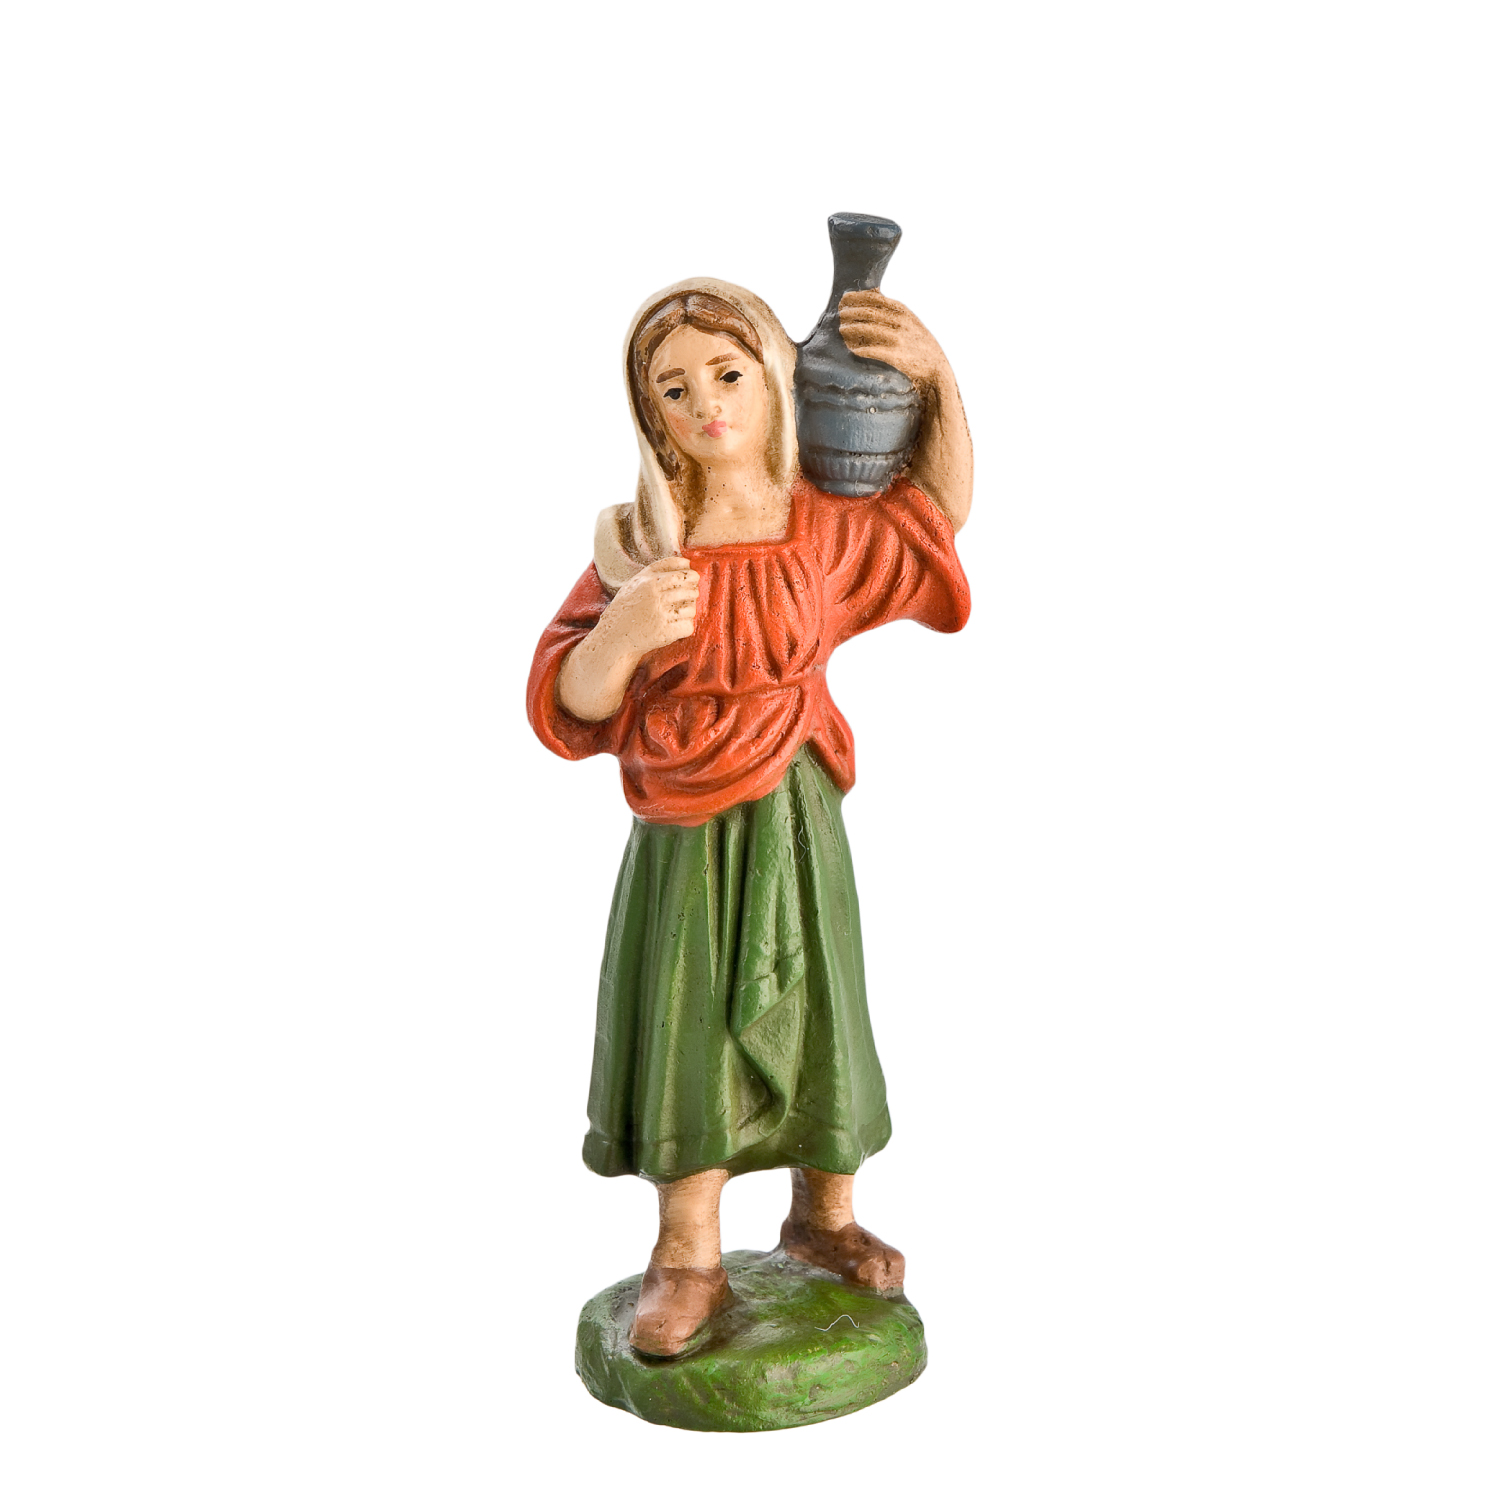 Shepherdess with jug, to 4 in. figures